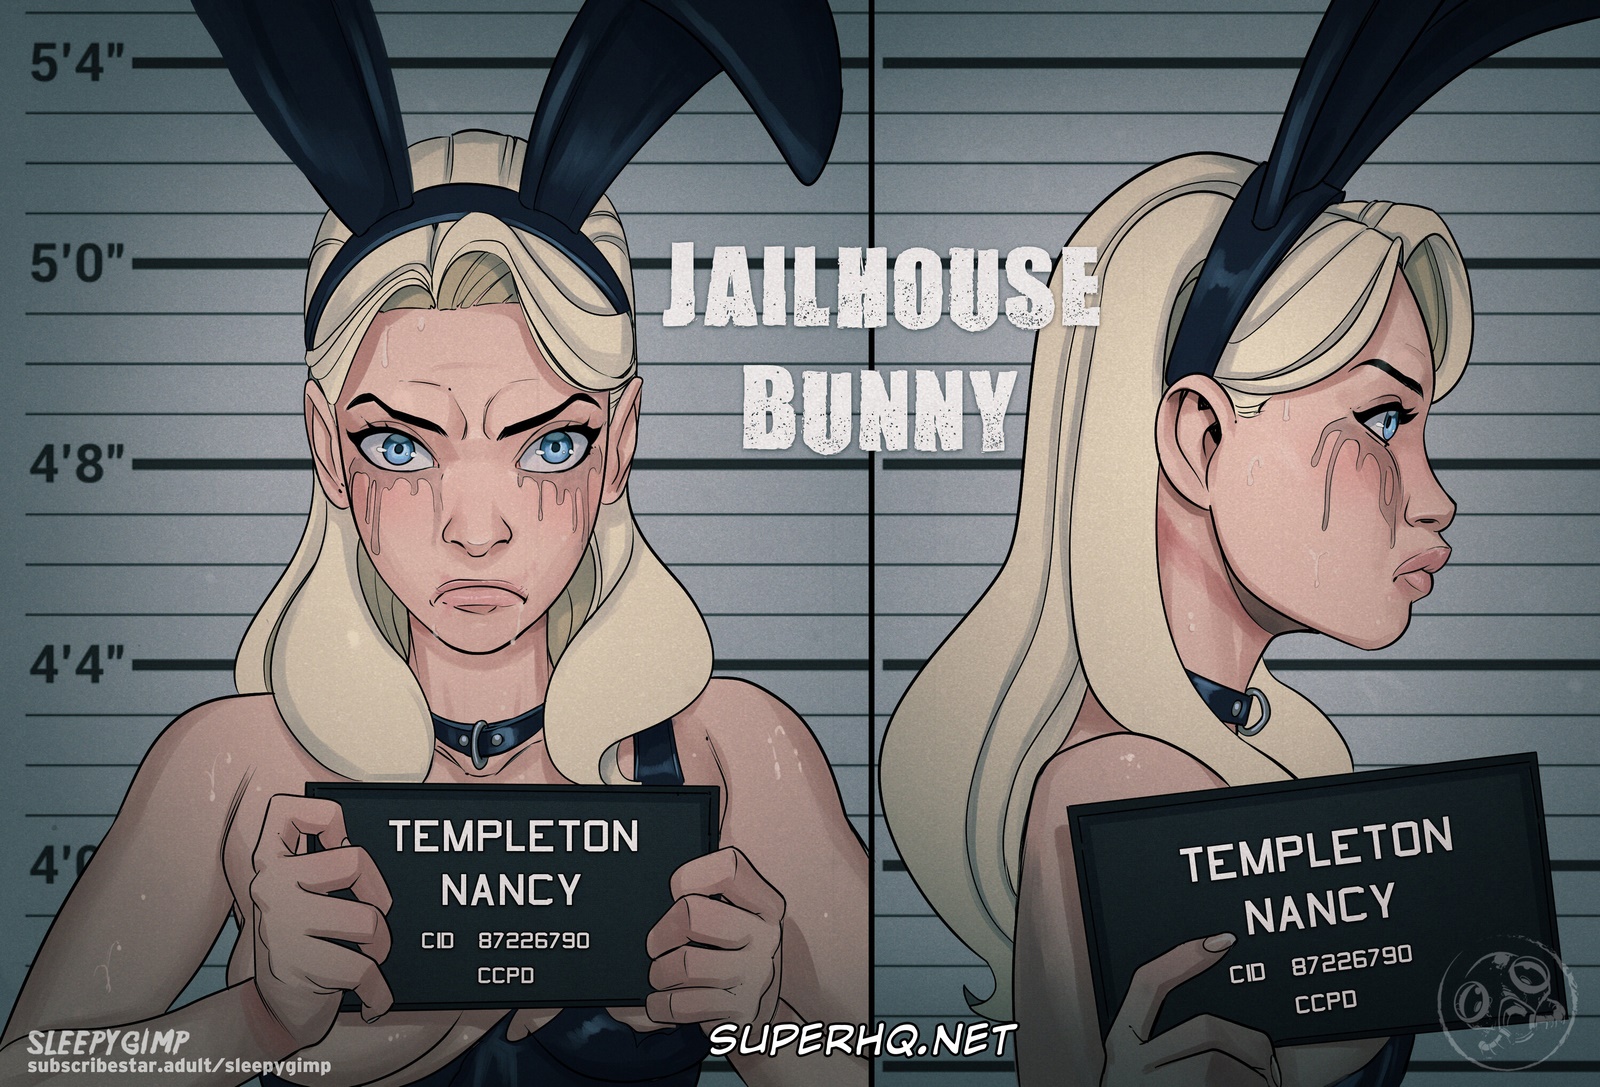 Jailhouse Bunny